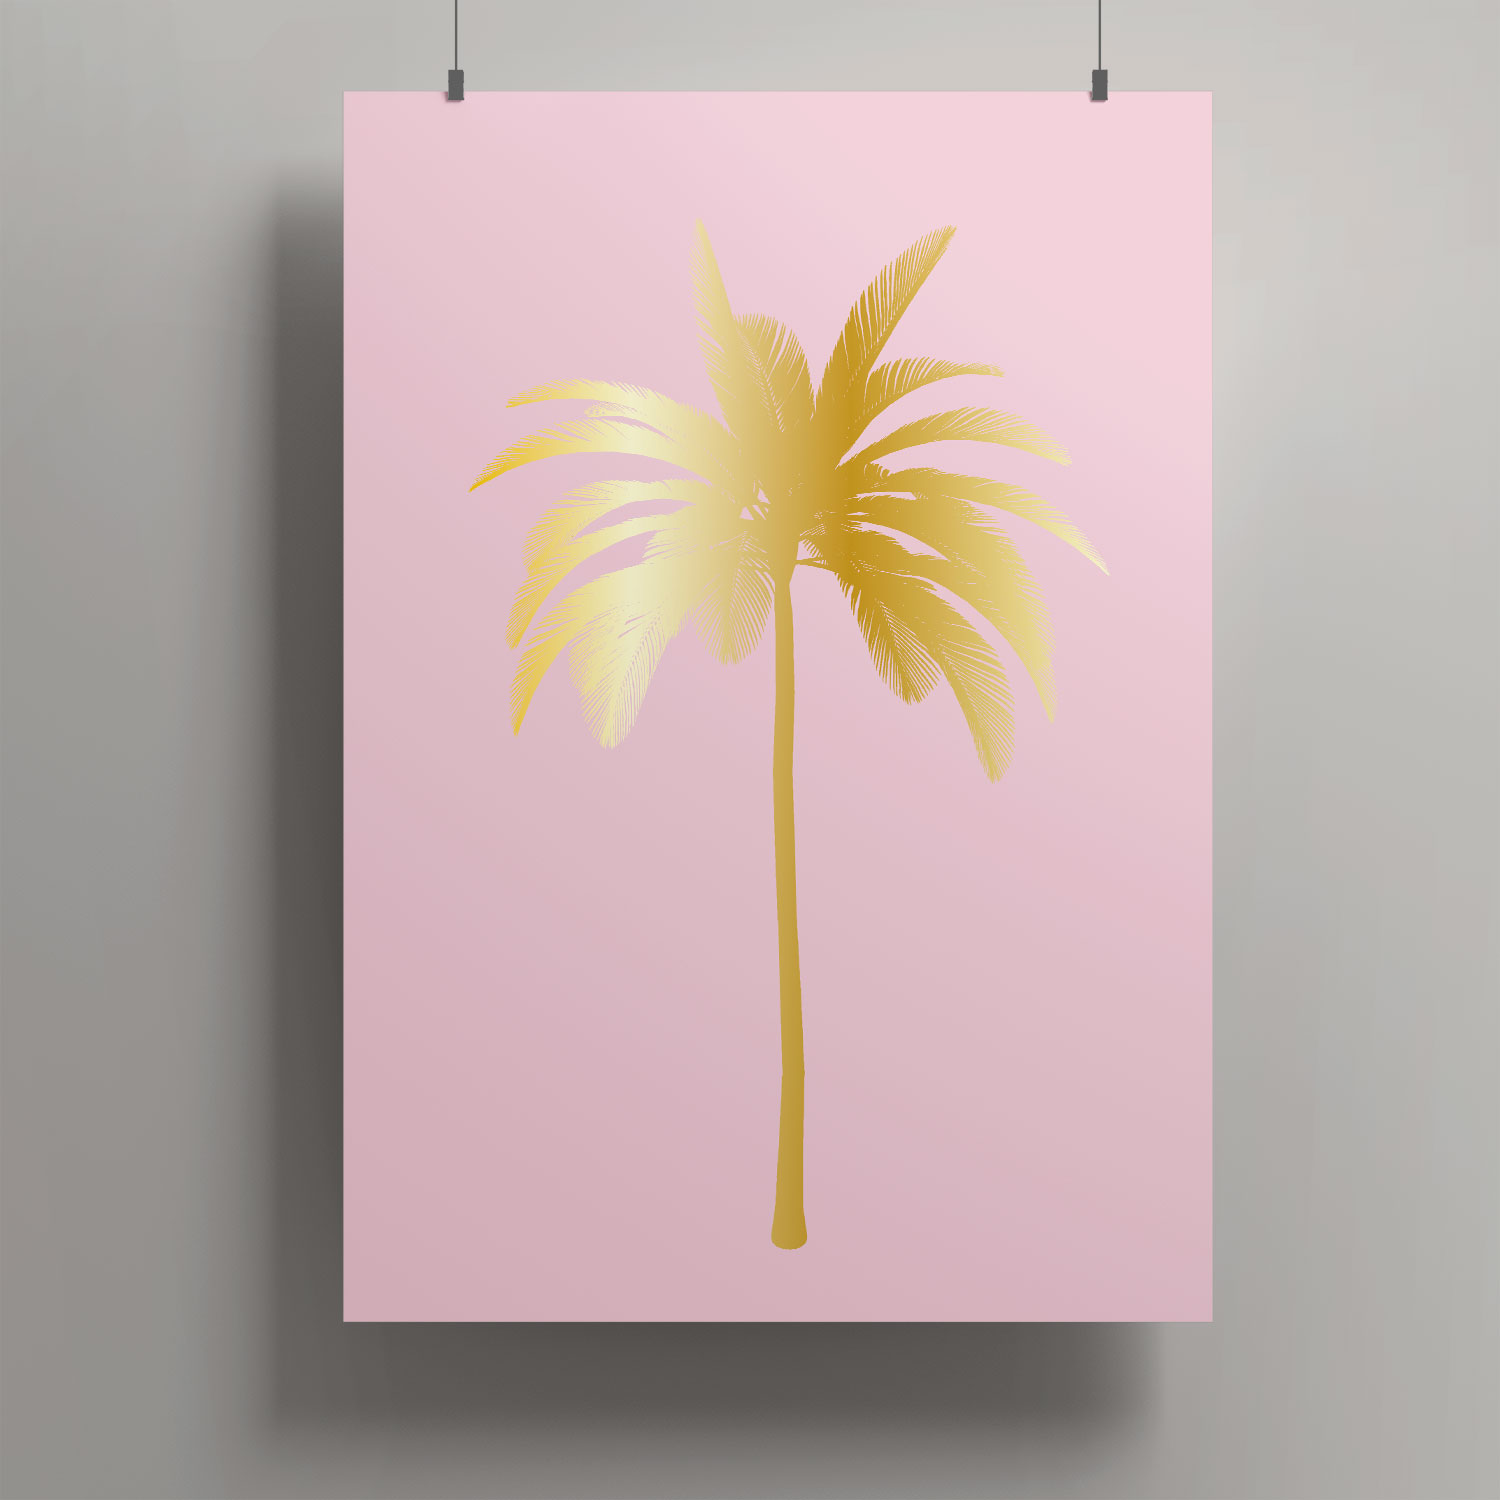 Artprint A4 - Toni Starck - Palm